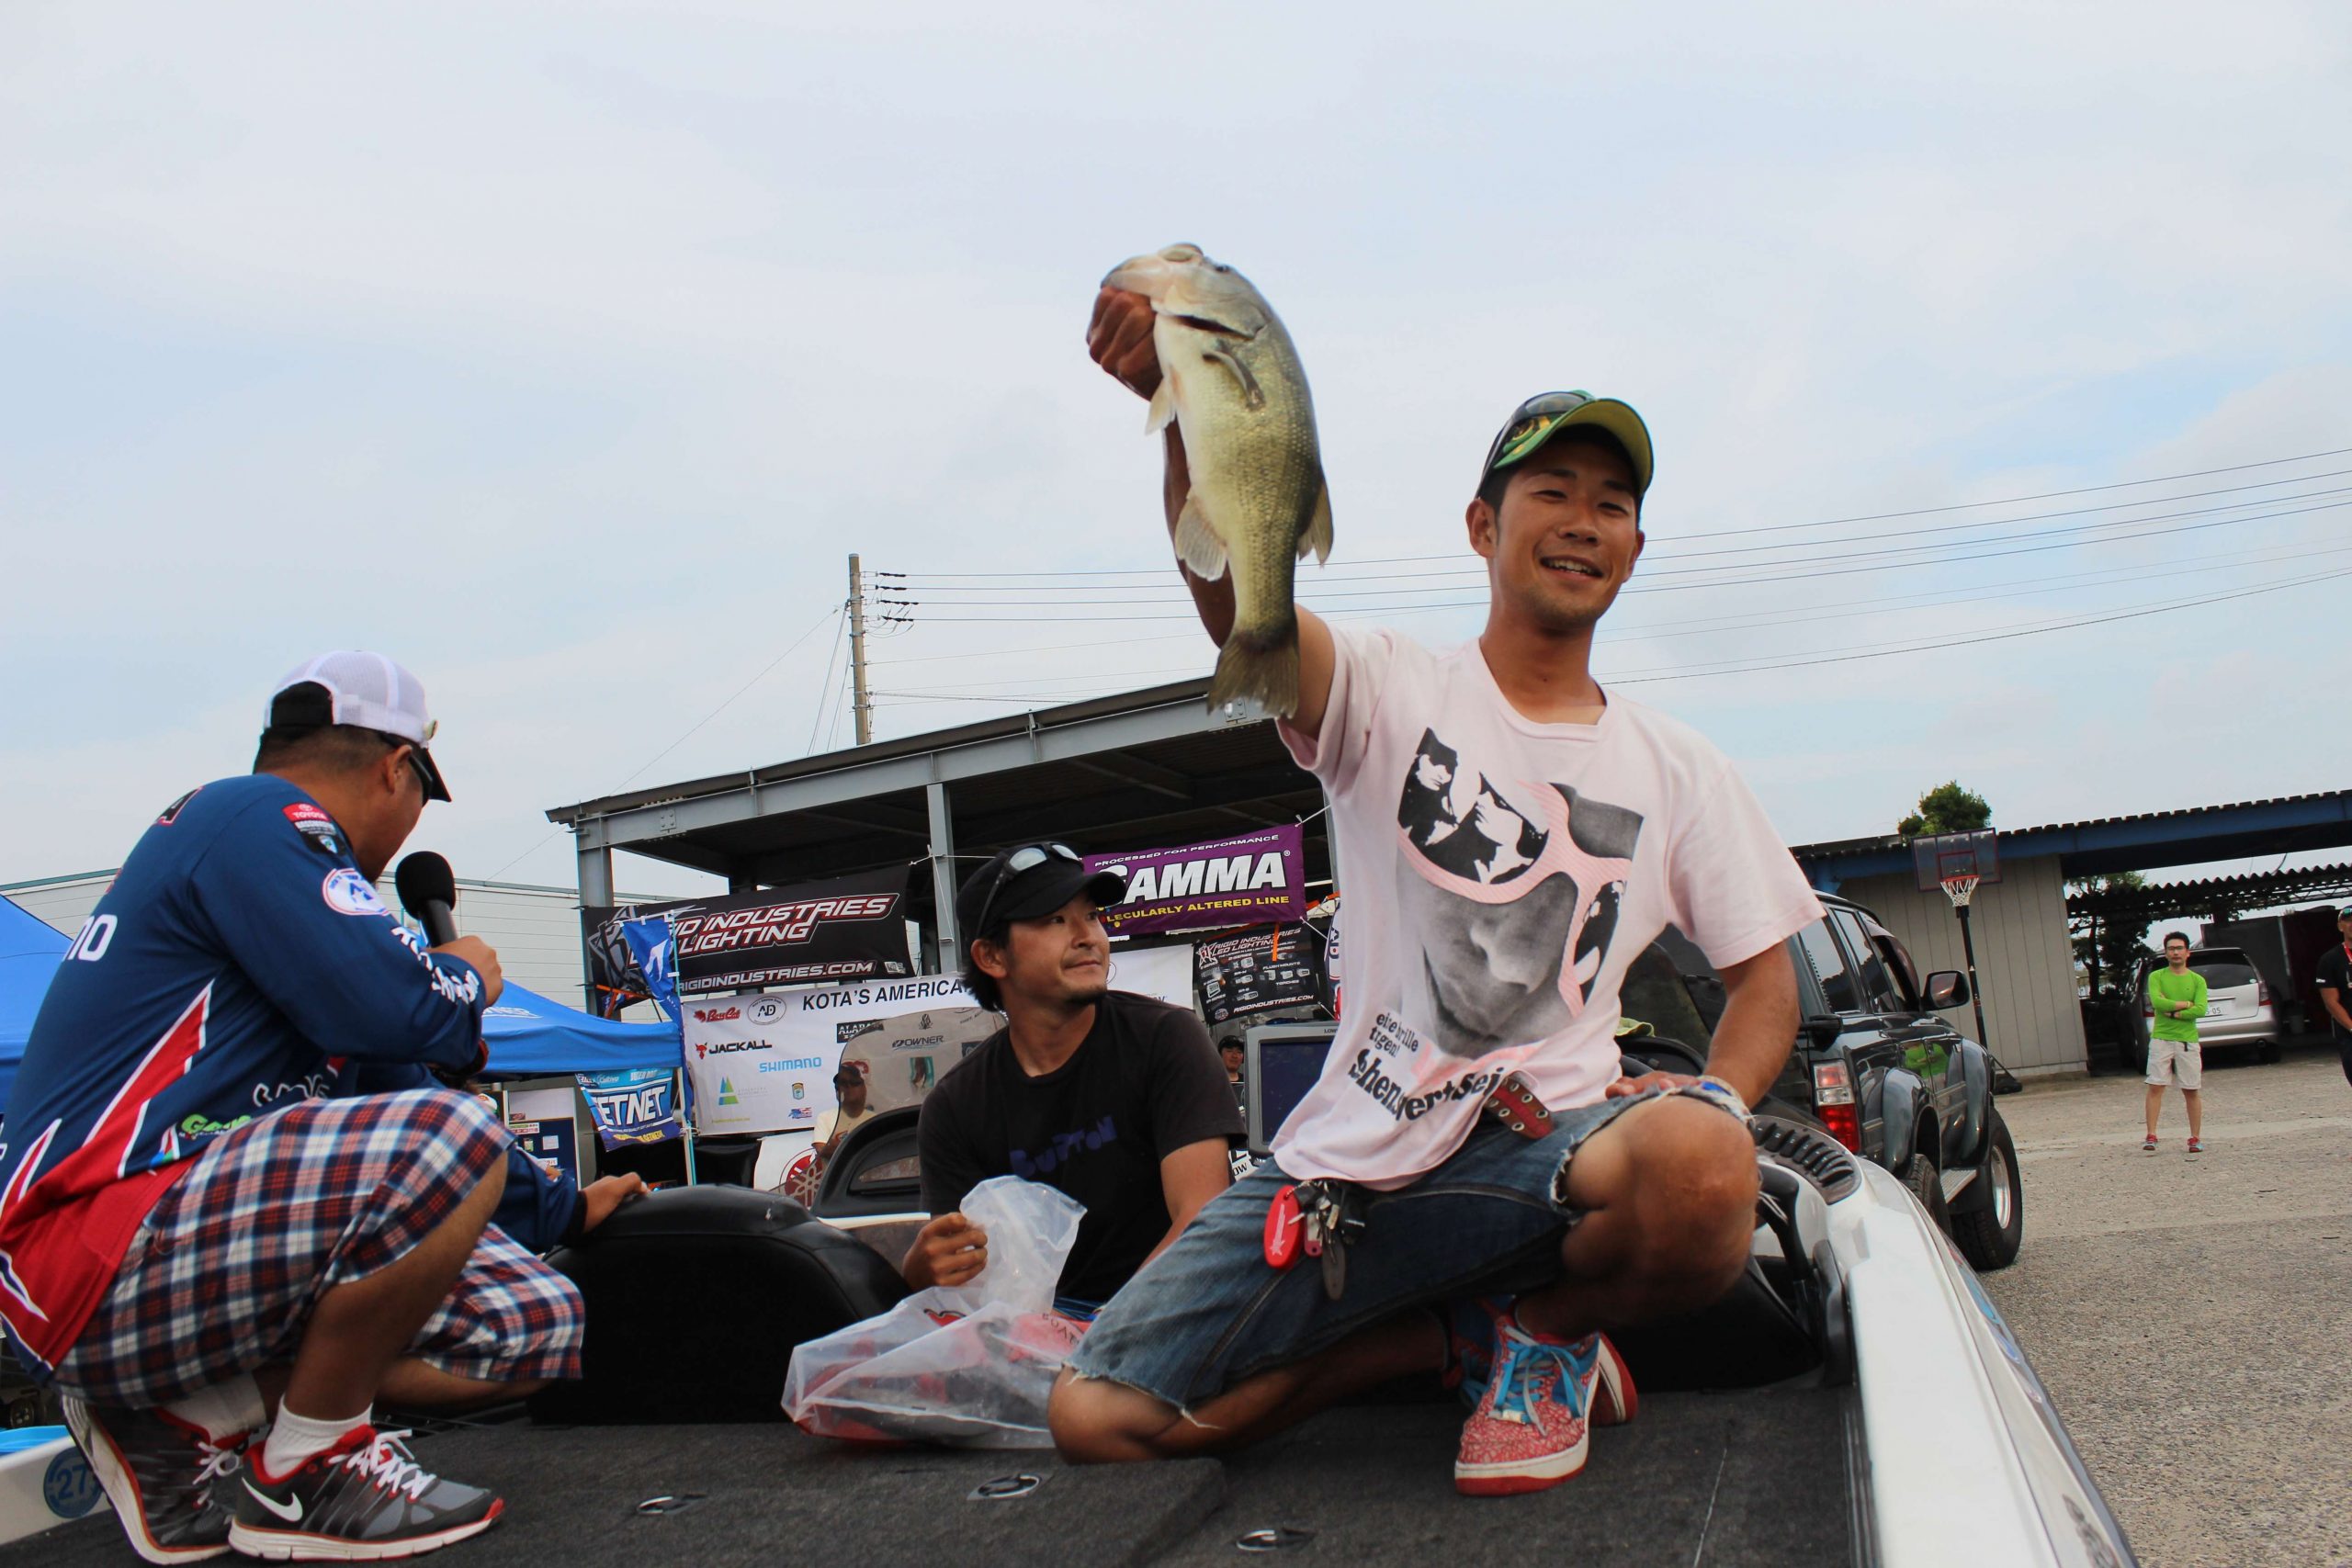 Another team drove through to weigh their fish as Kiriyama announces their weight.